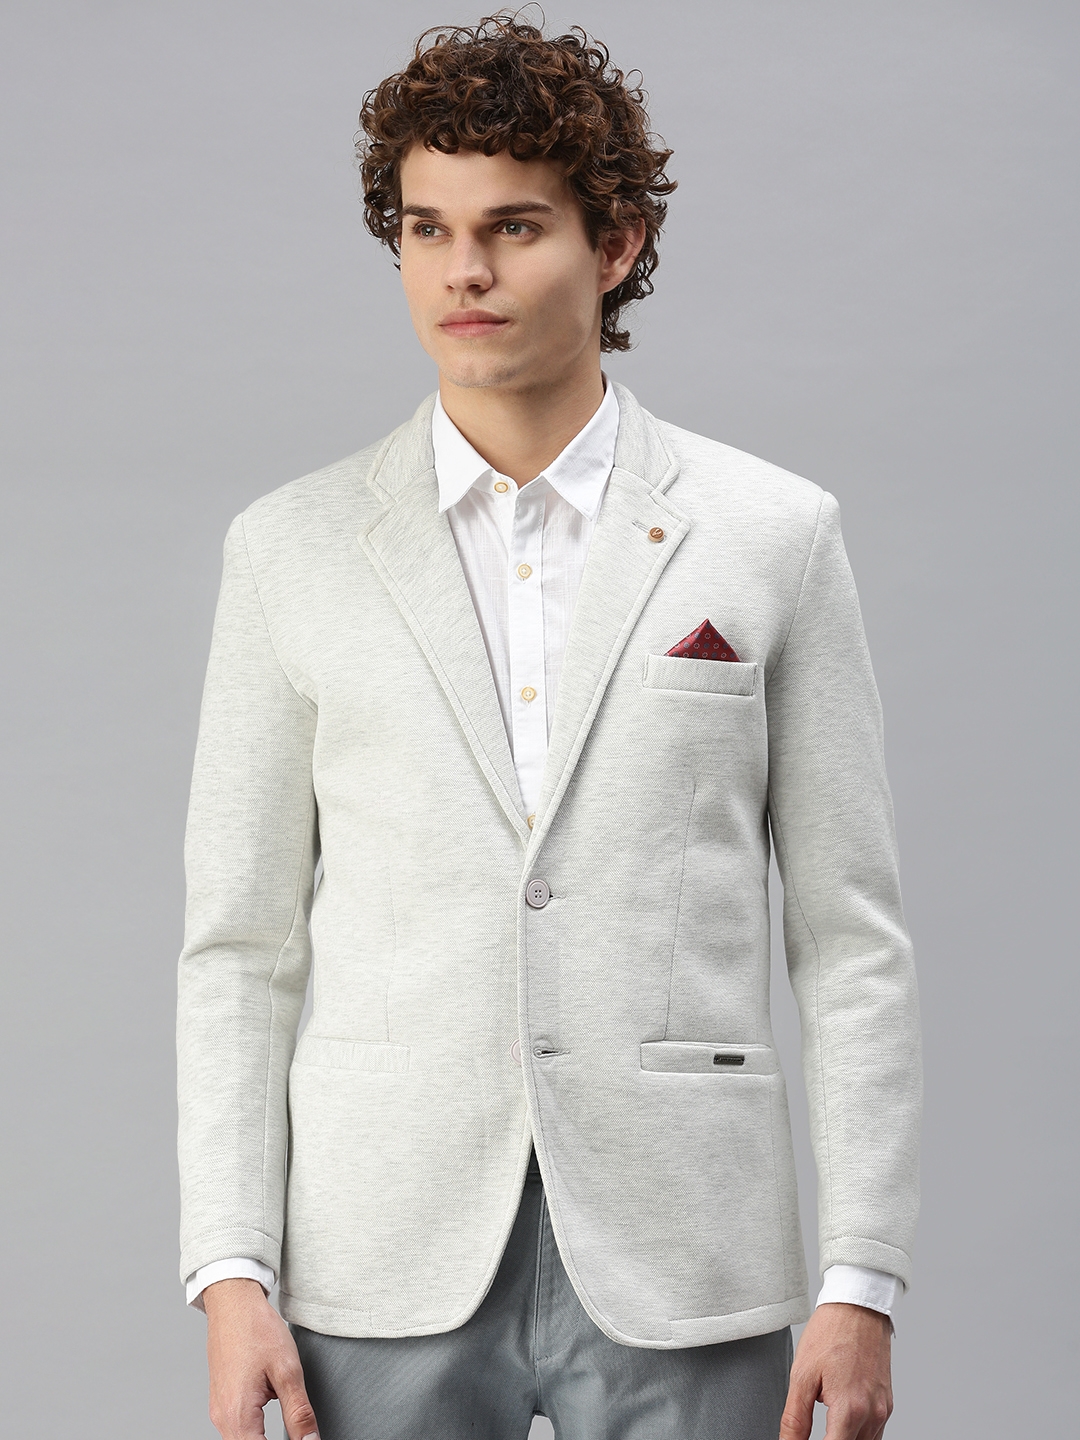 Men's White Cotton Blend Solid Blazers